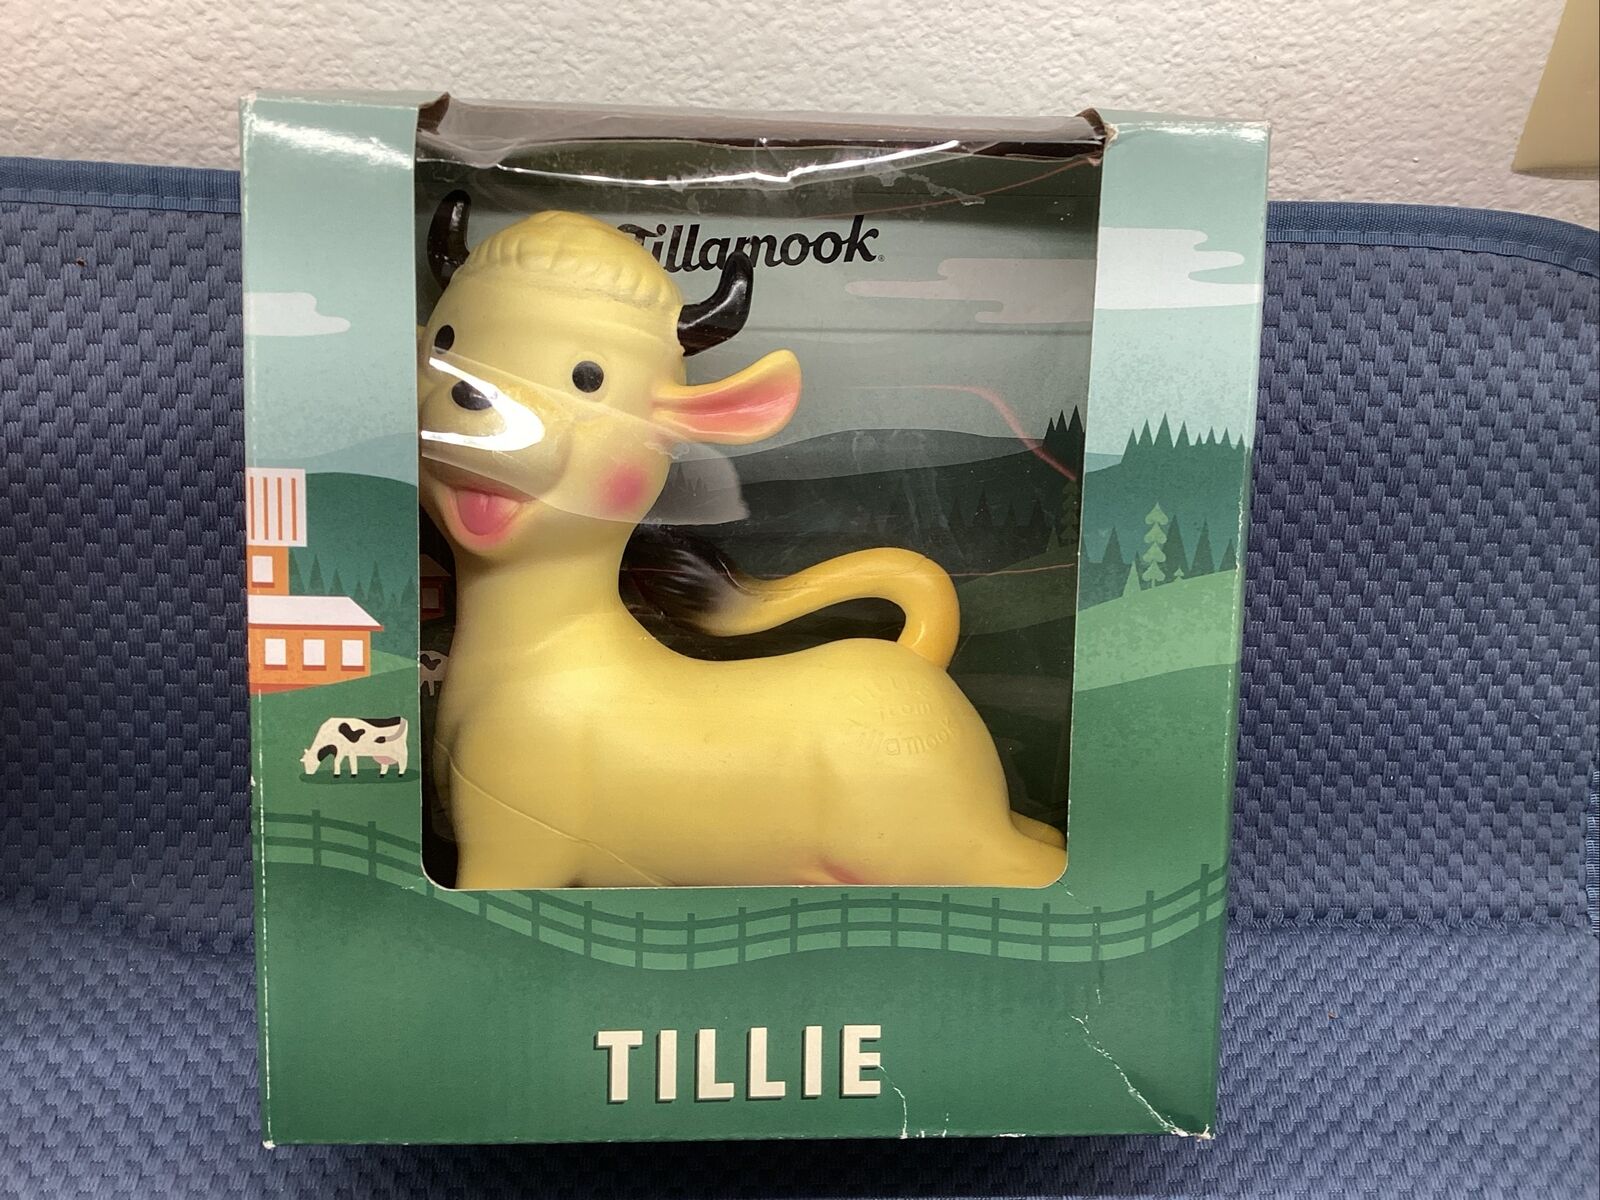 Tillamook creamery made in Oregon Tillie the cow mascot figure